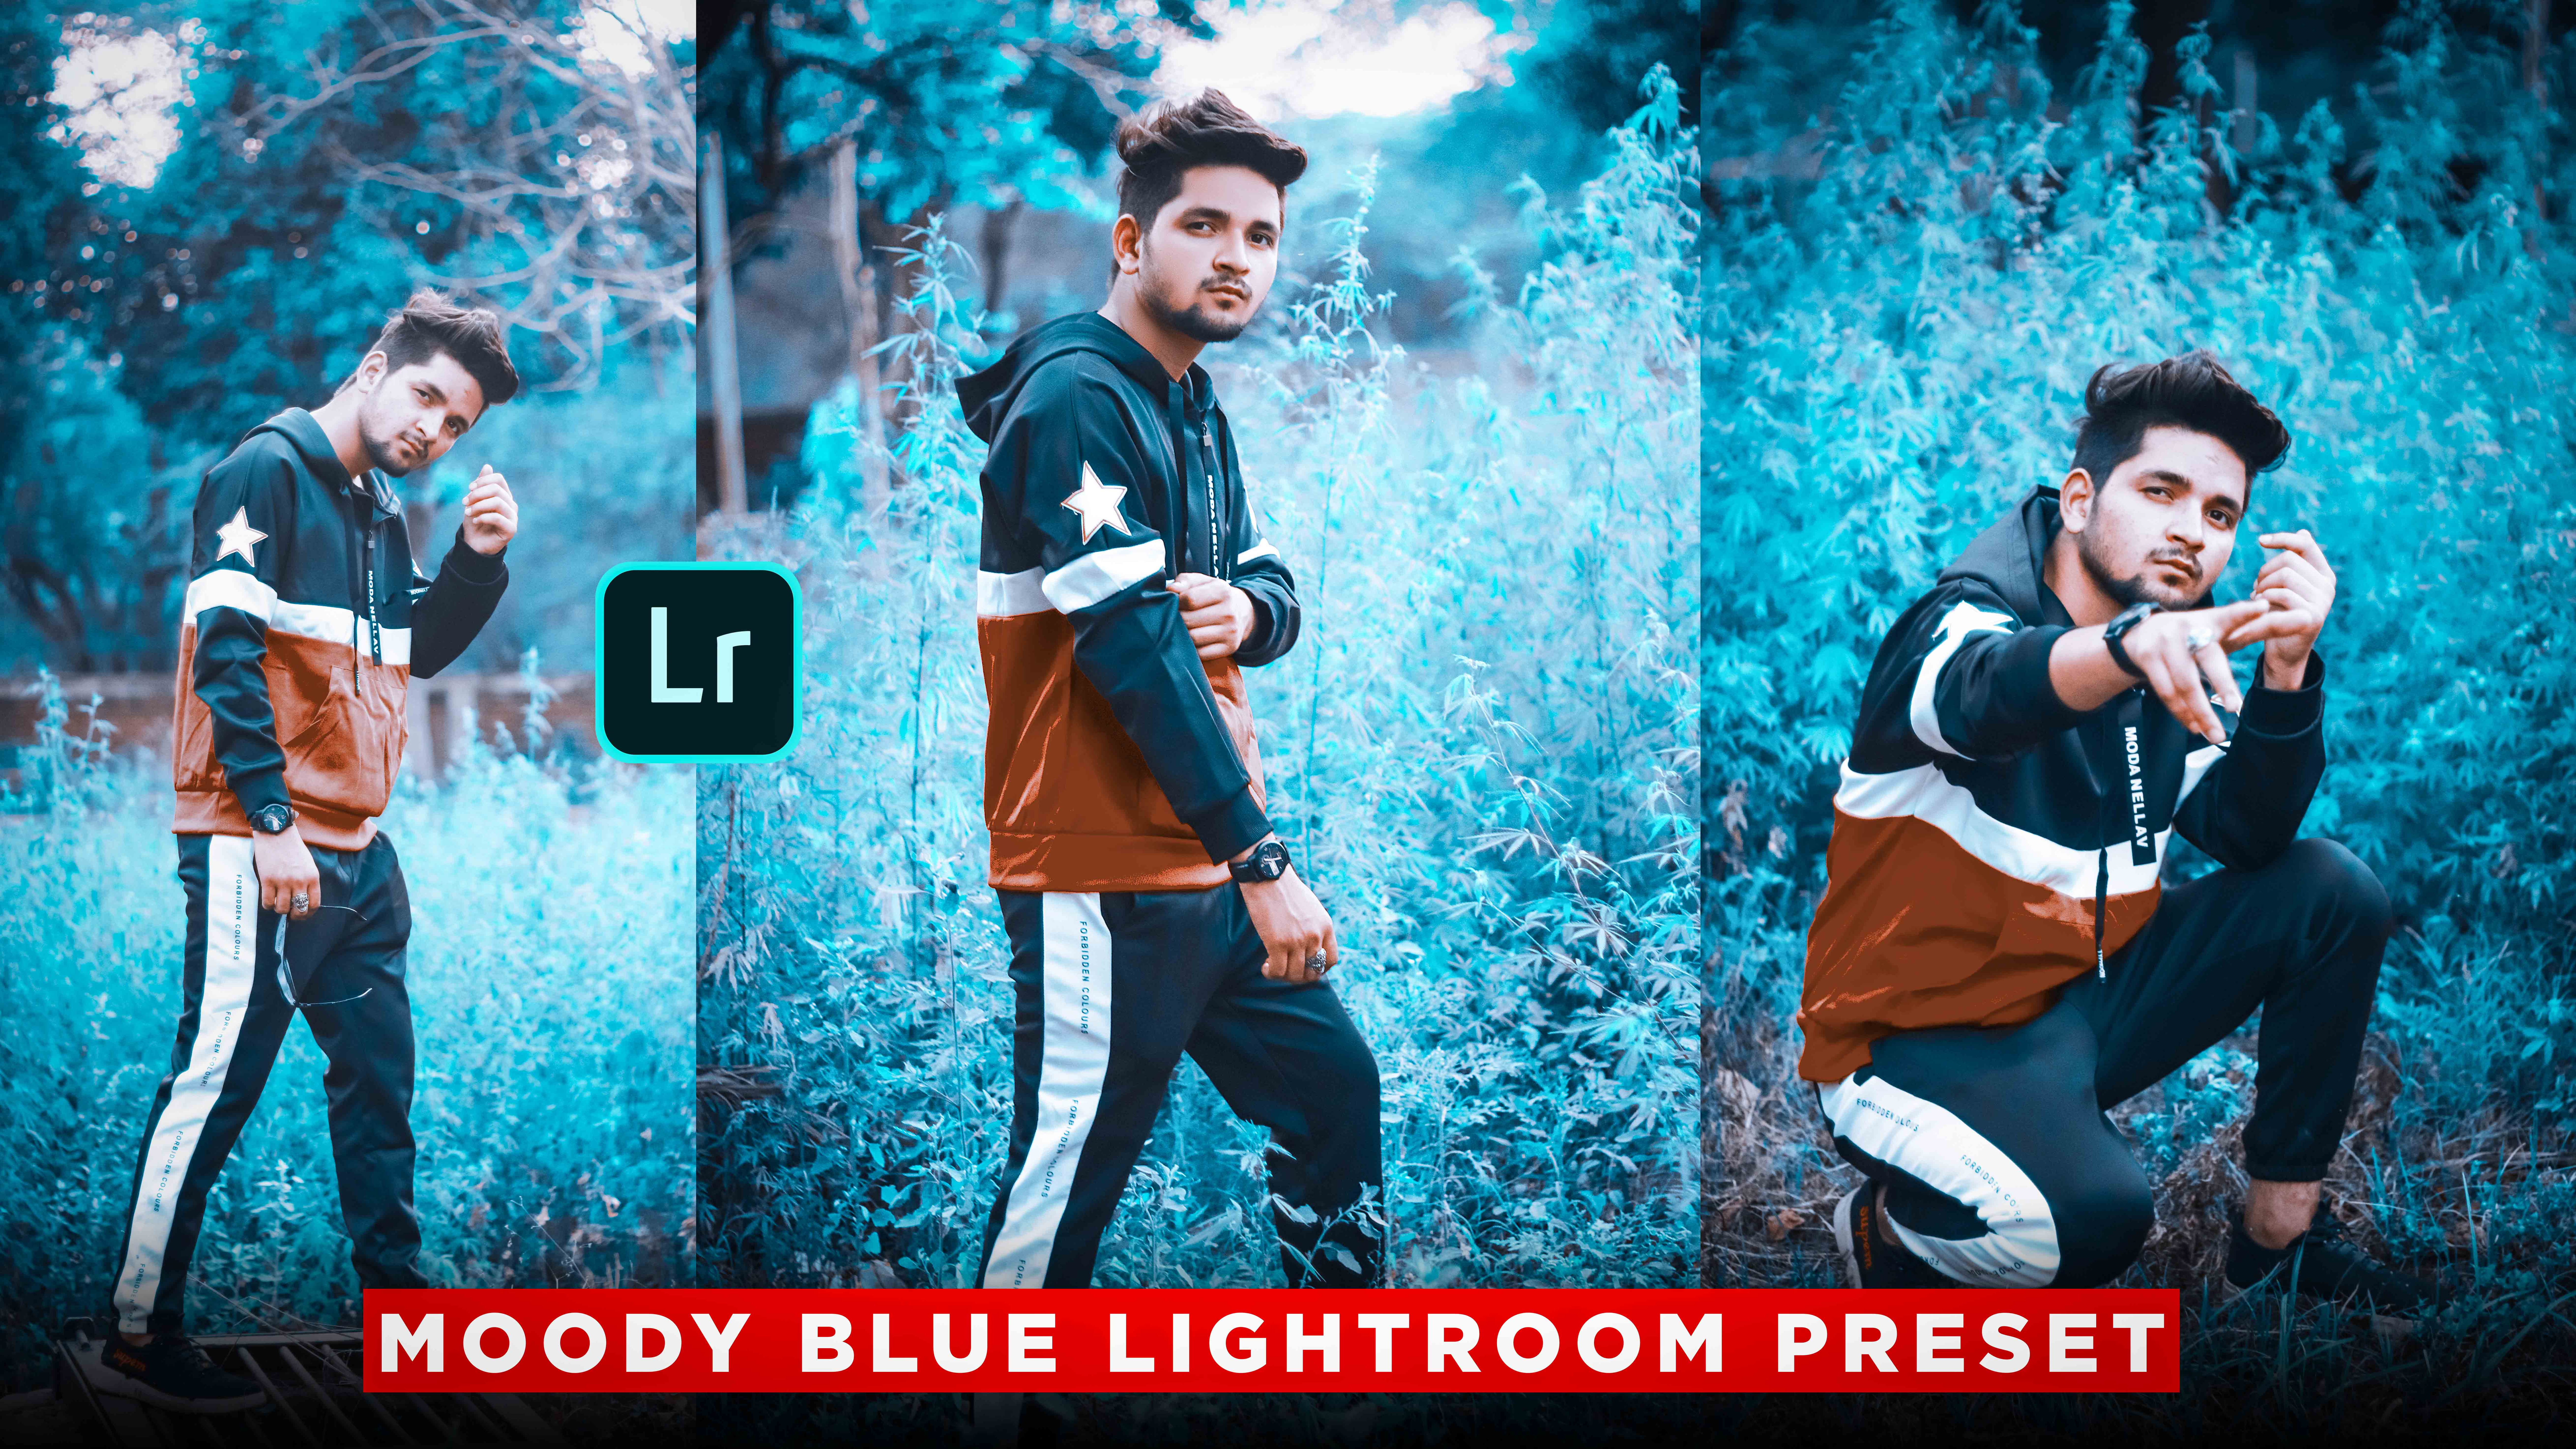 Moody blue lightroom preset download - NEW FREE Preset download